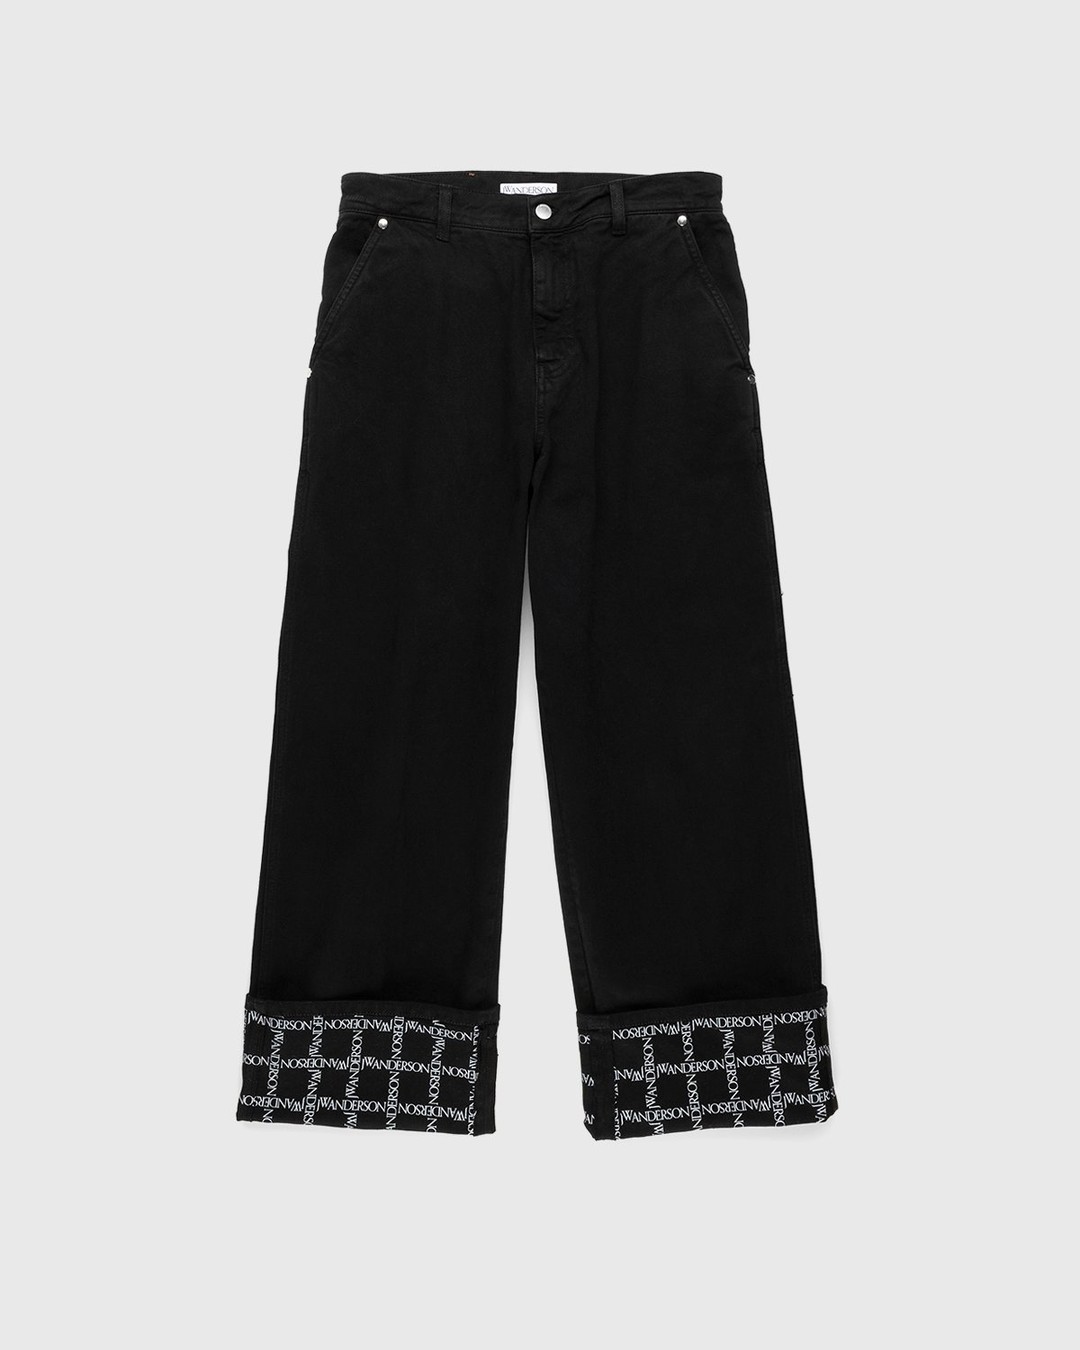 J.W. Anderson – Logo Grid Cuff Wide Leg Jeans Black - Pants - Black - Image 1